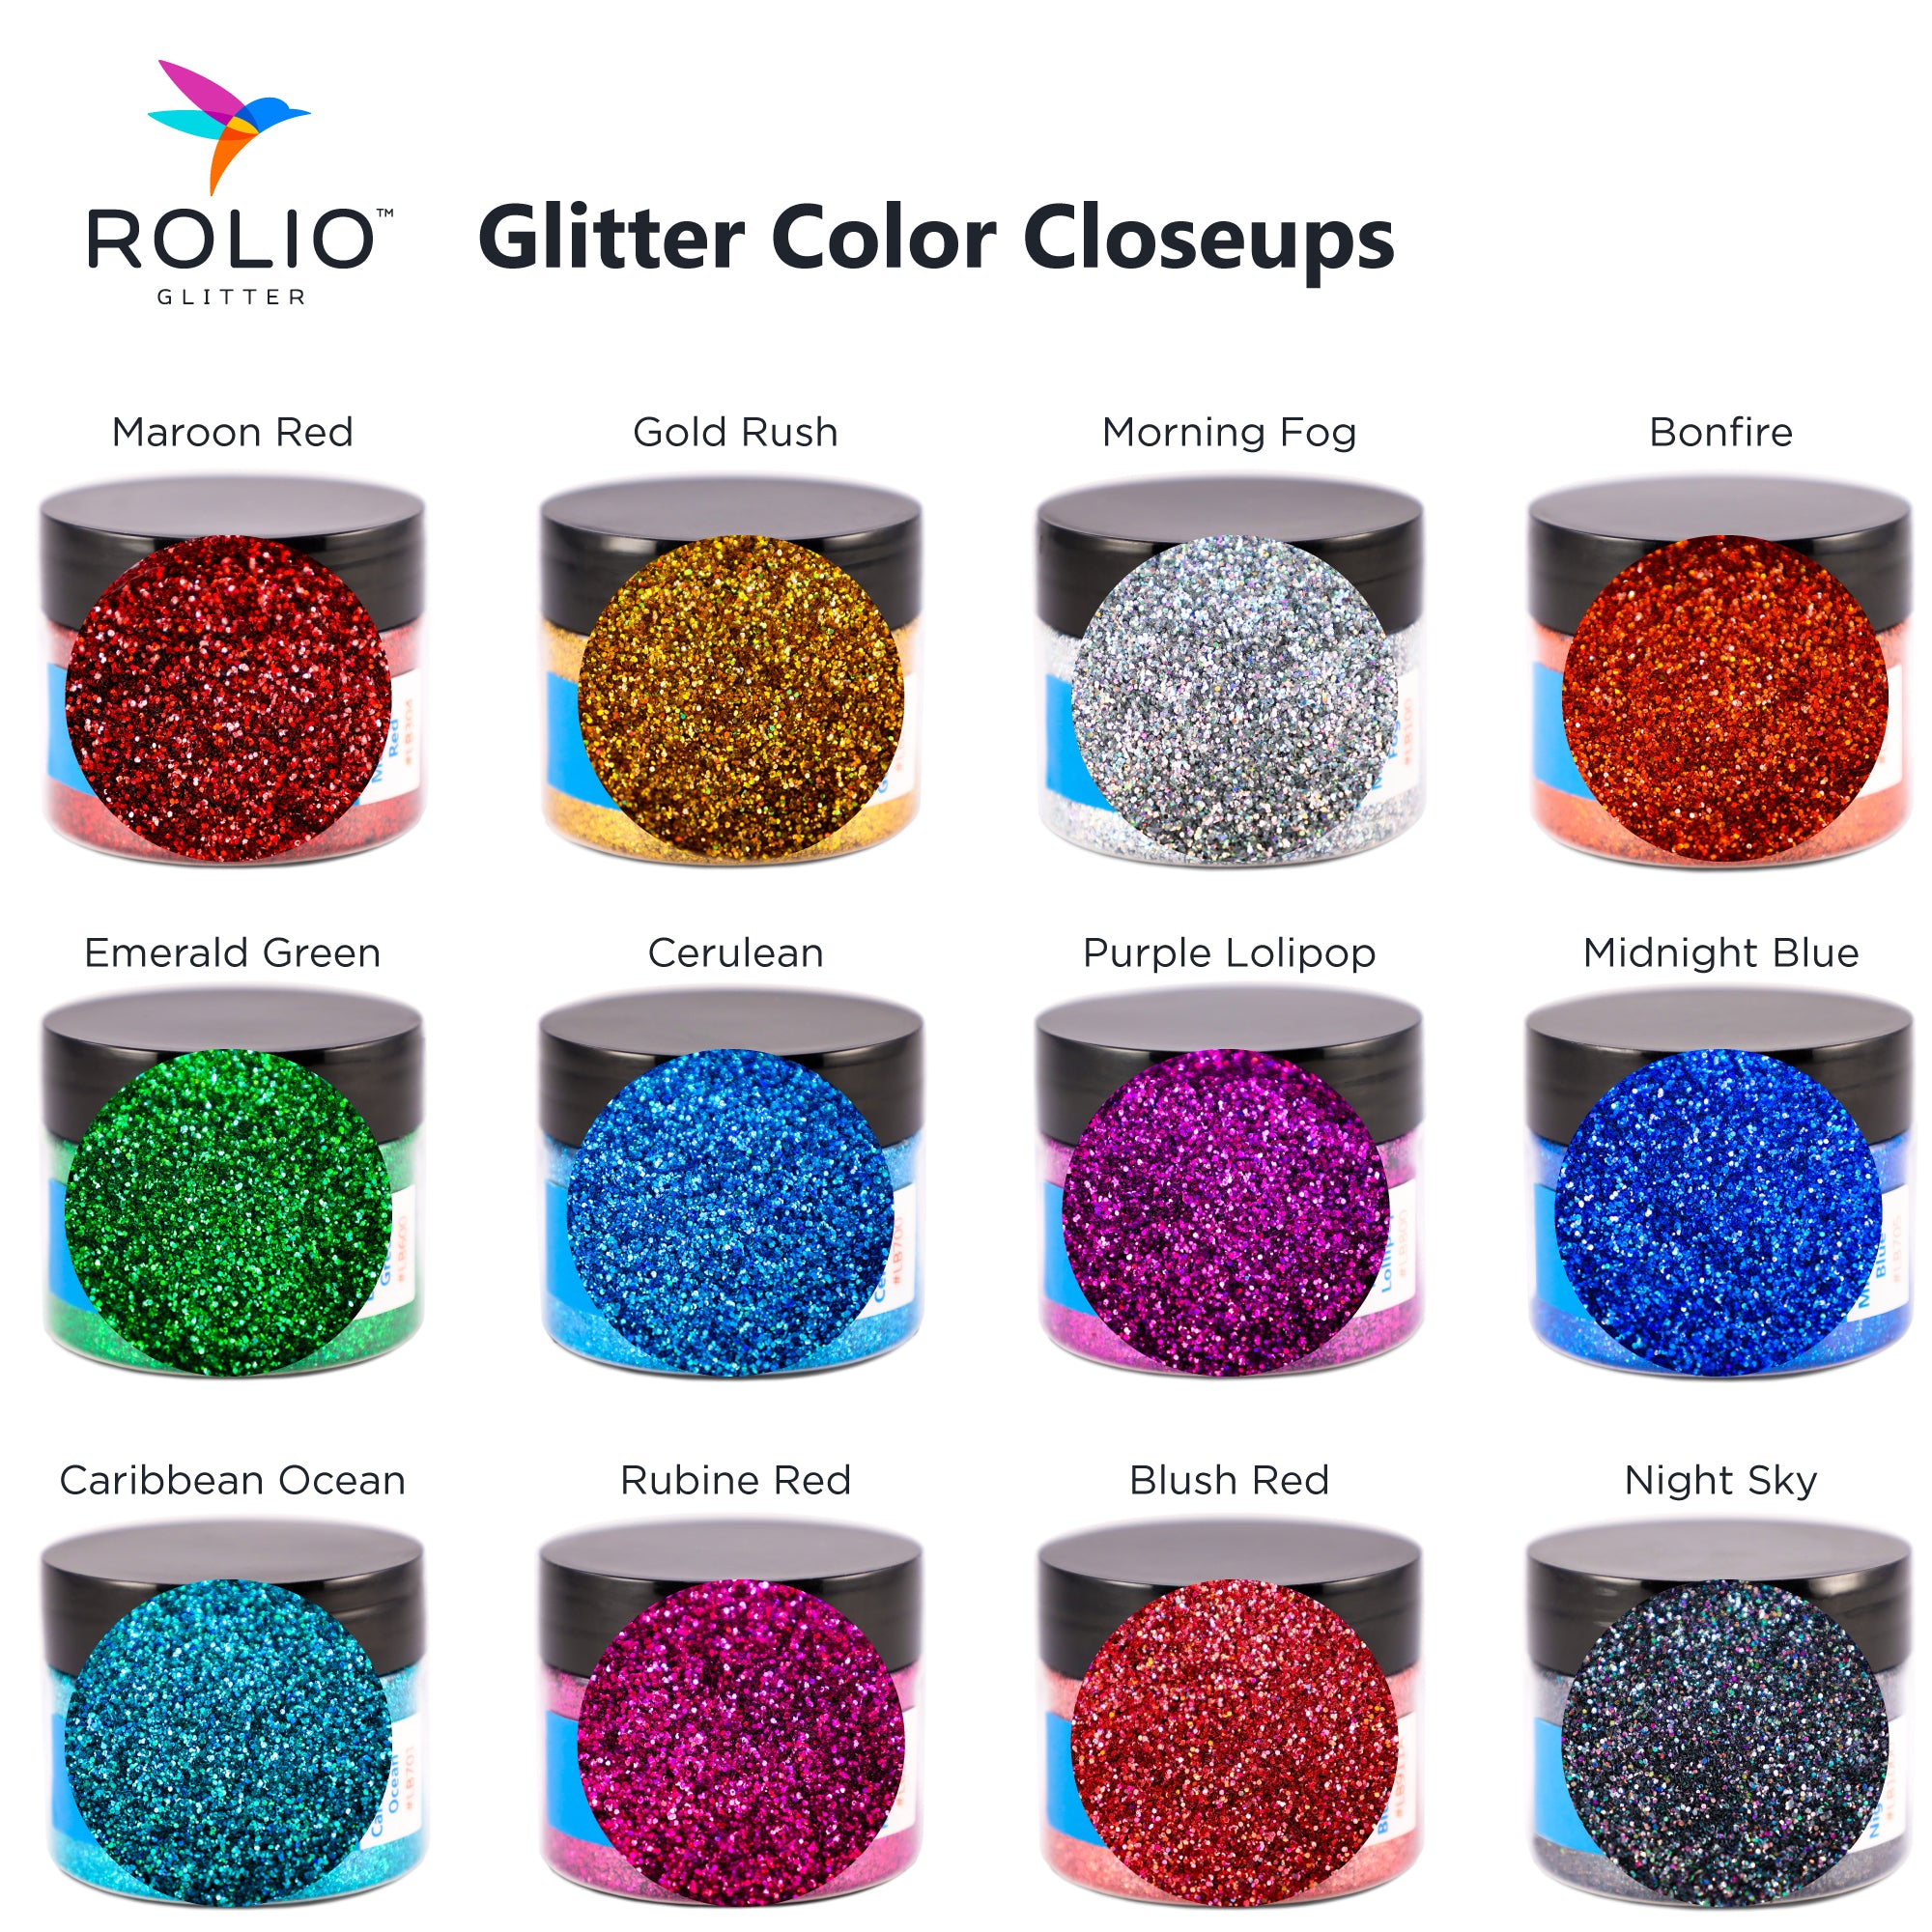 Glitter-Color-Closeups-2.jpg